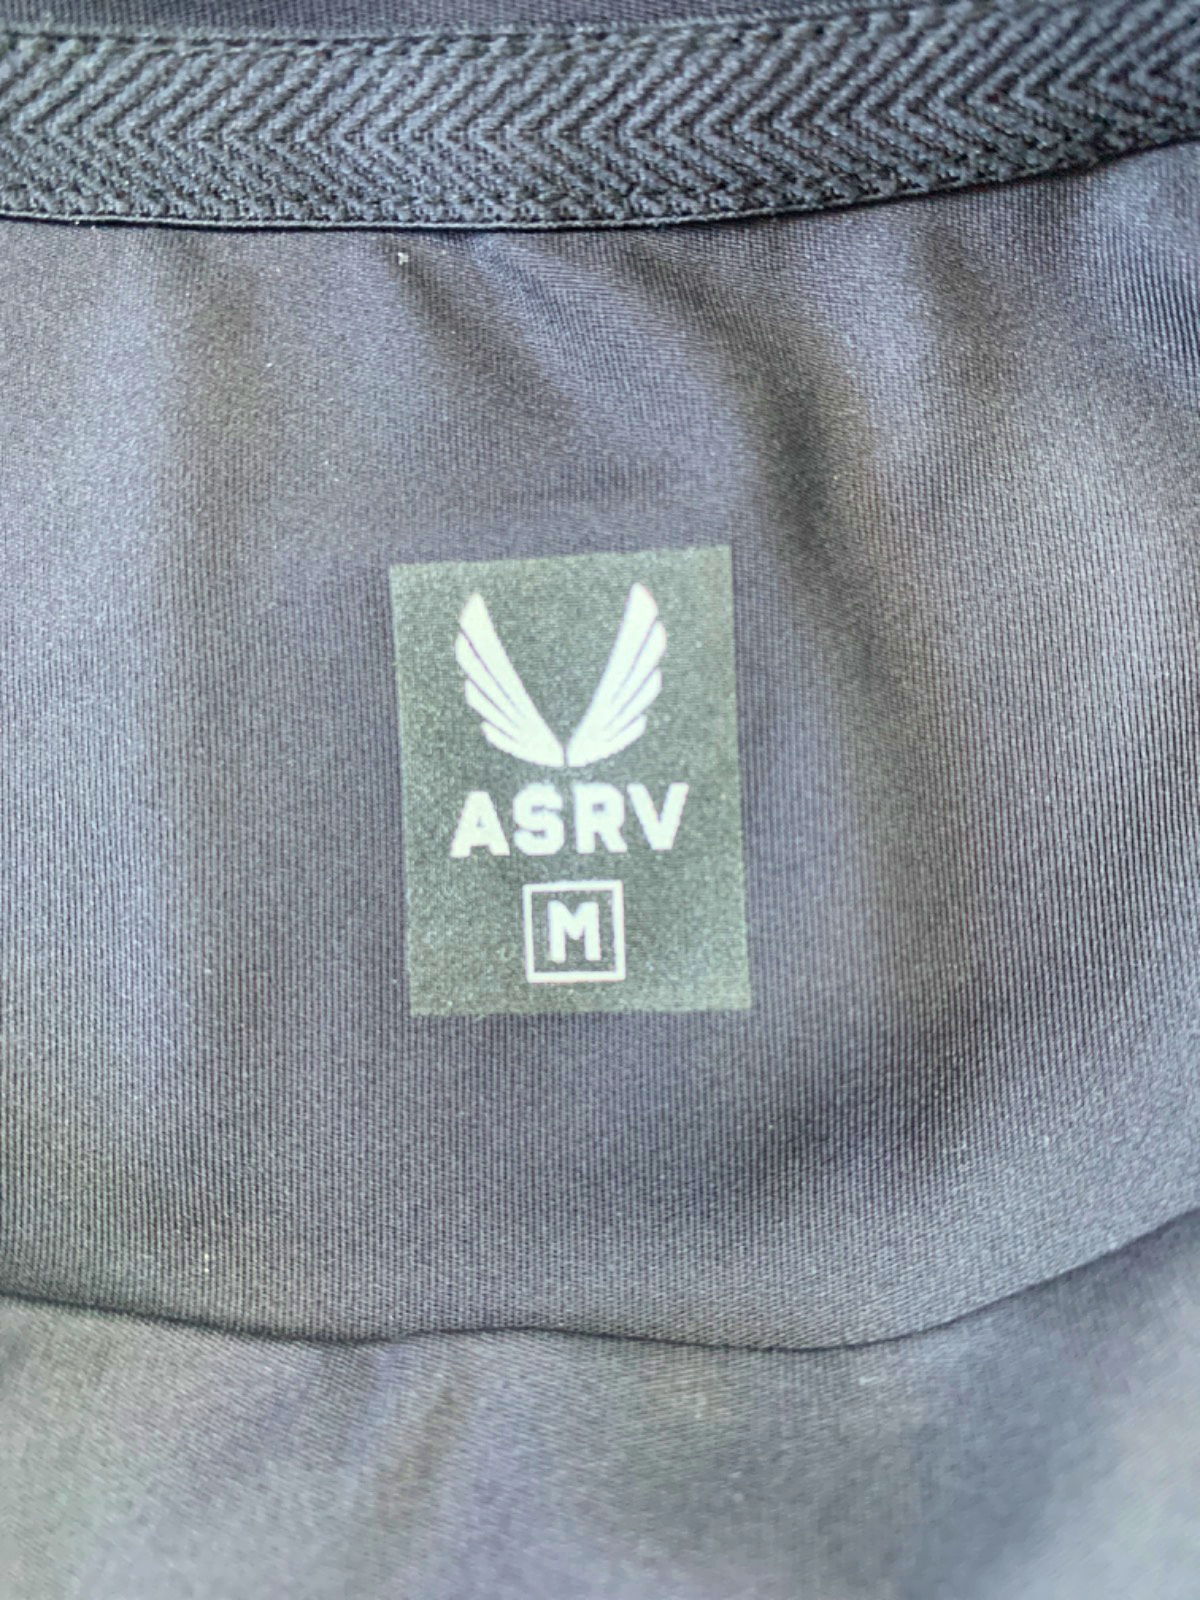 ASRV Black Sleeveless Training Top M